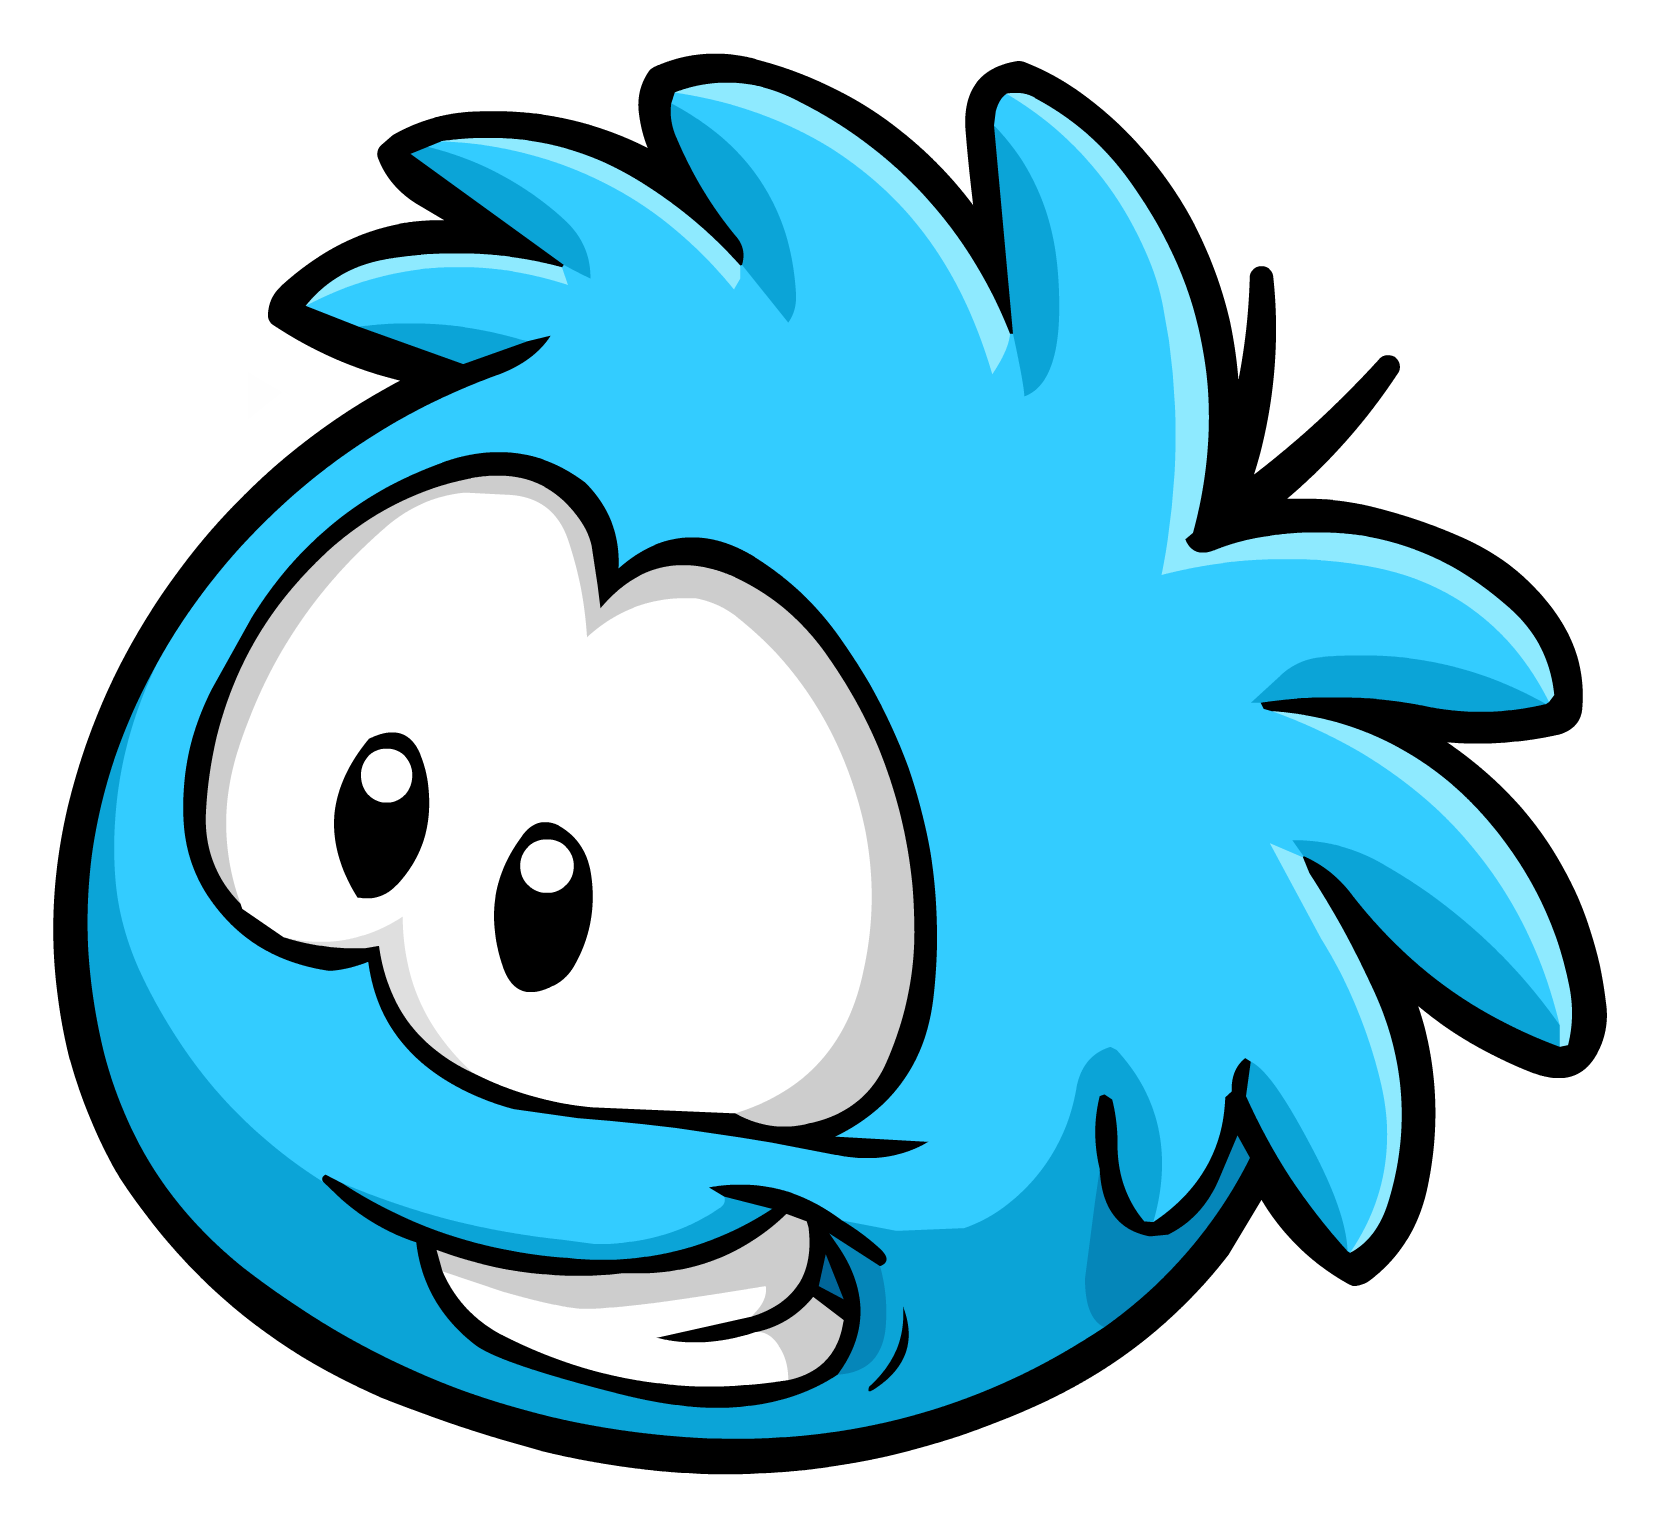 A Cartoon Blue Bird With White Face